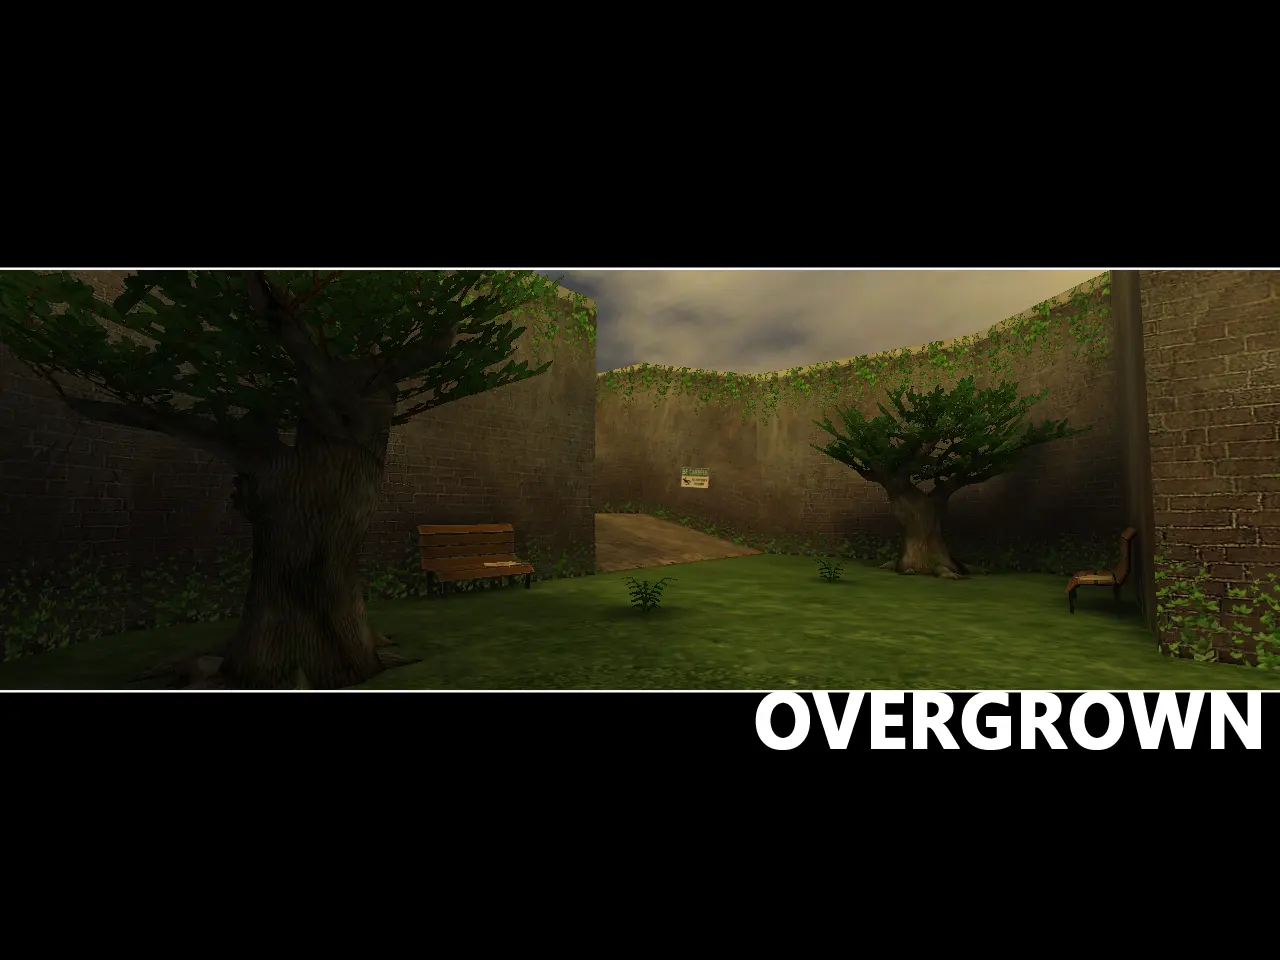 ut4_overgrown_b1